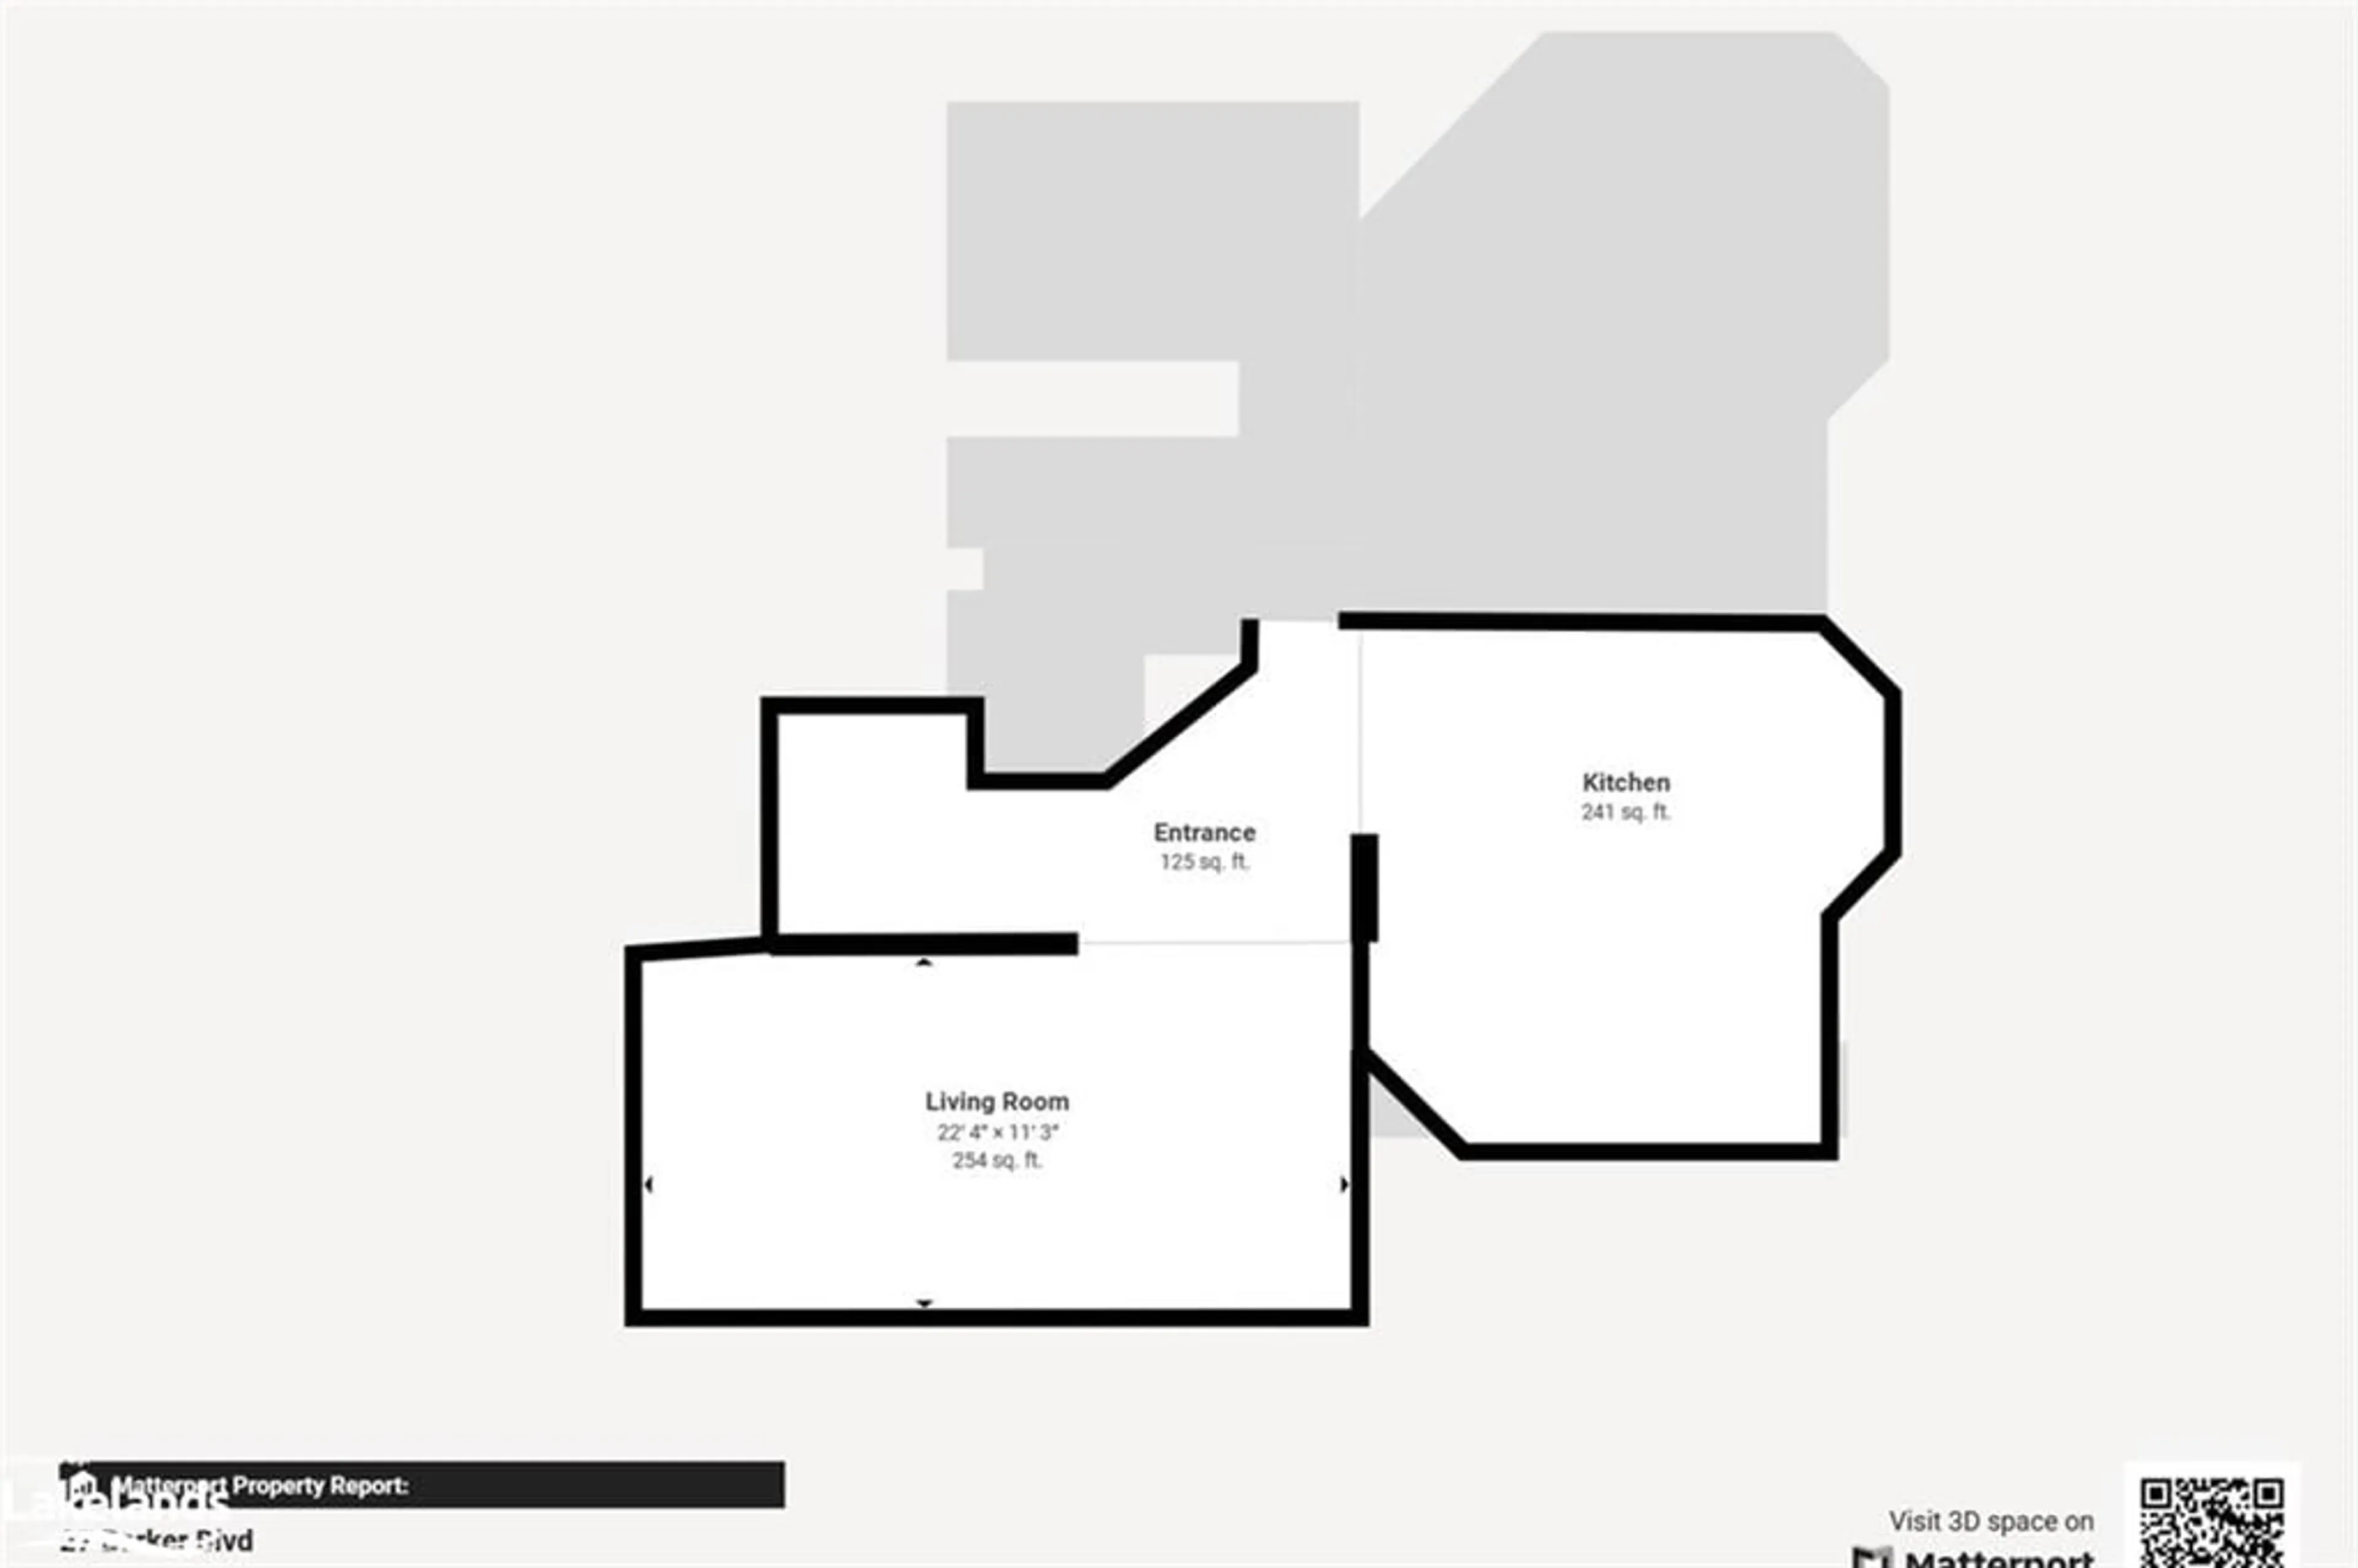 Floor plan for 27 Barker Blvd, Collingwood Ontario L9Y 4W4